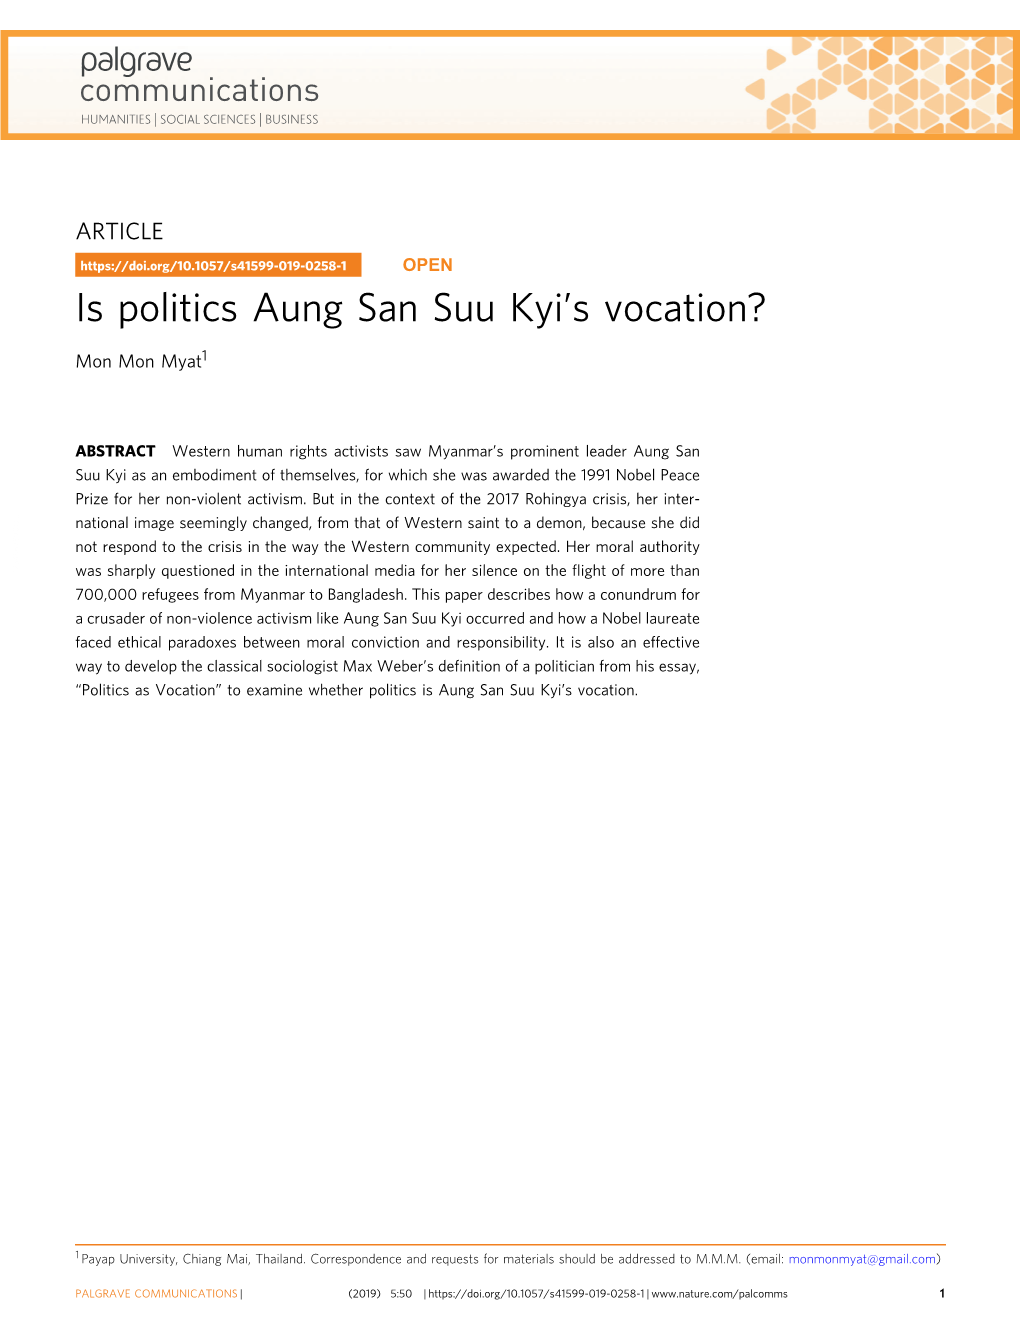 Is Politics Aung San Suu Kyi's Vocation?